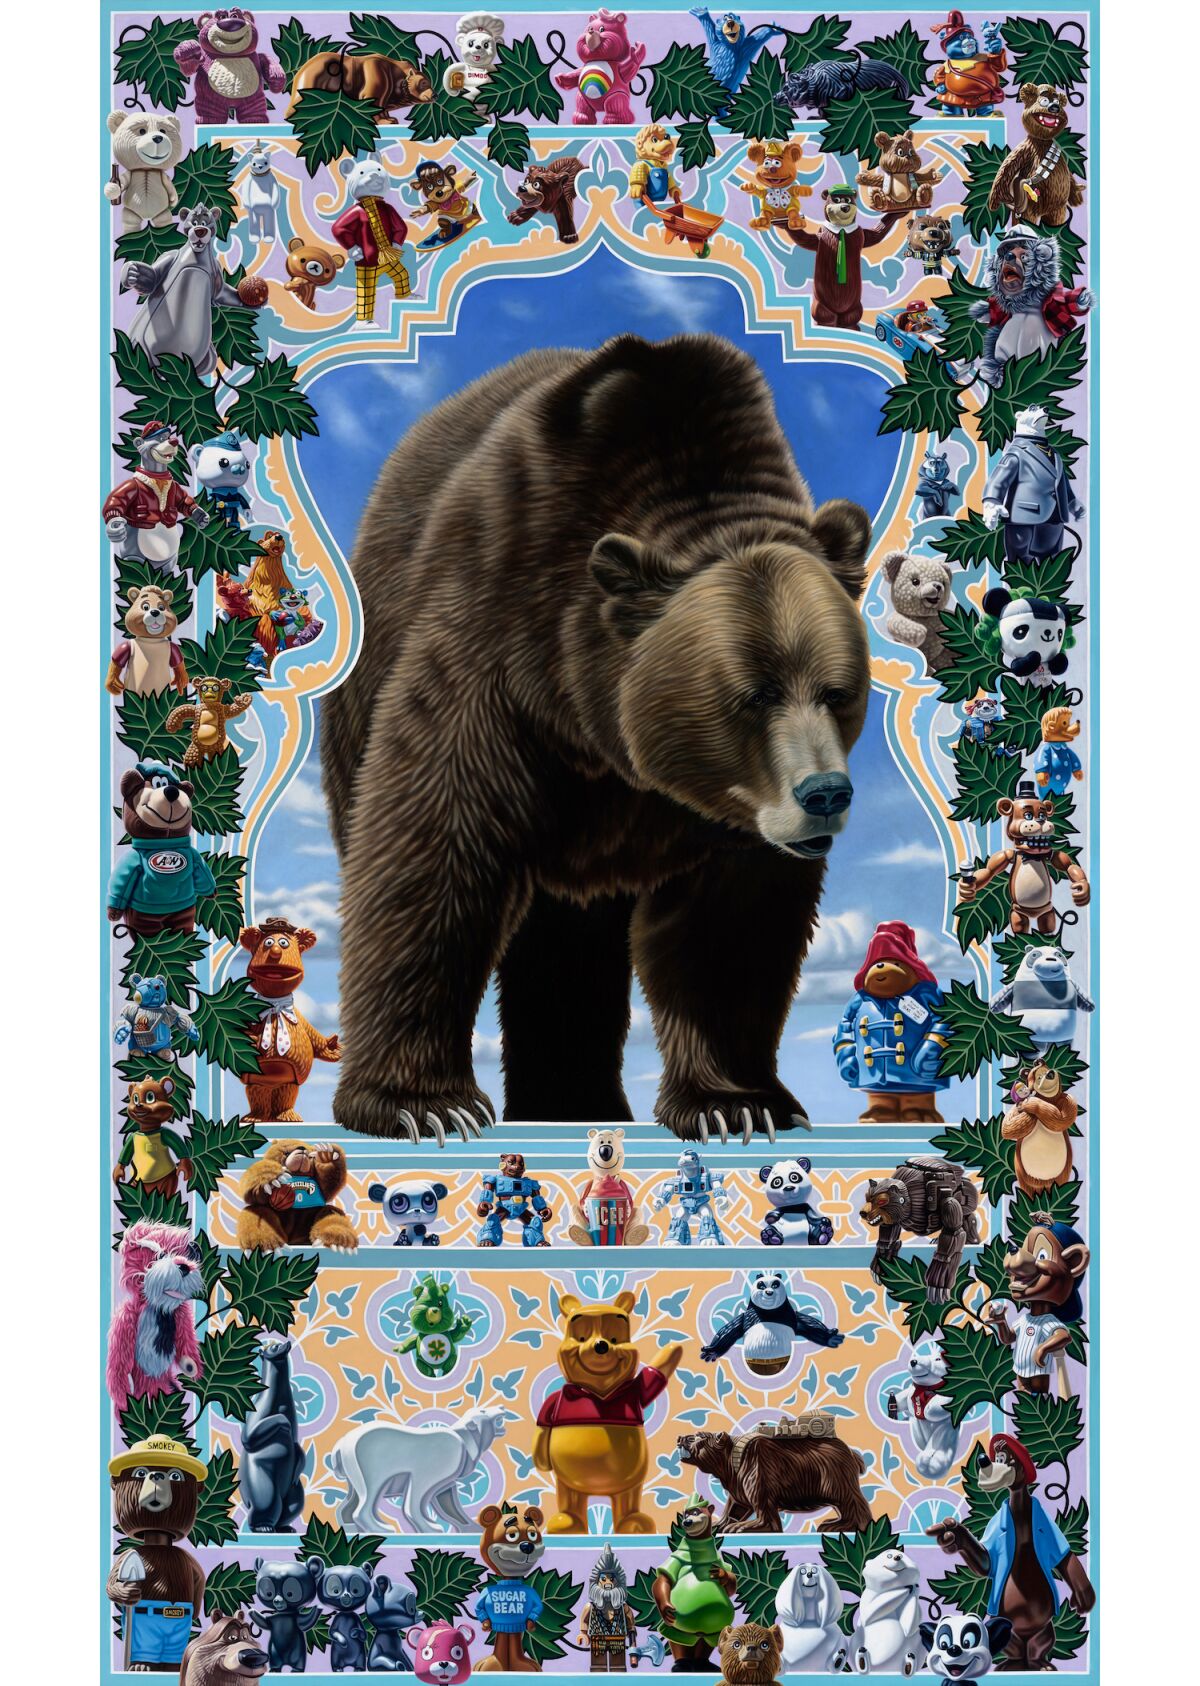 "The Bear Painting" by "Robert Xavier Burden: Relics."